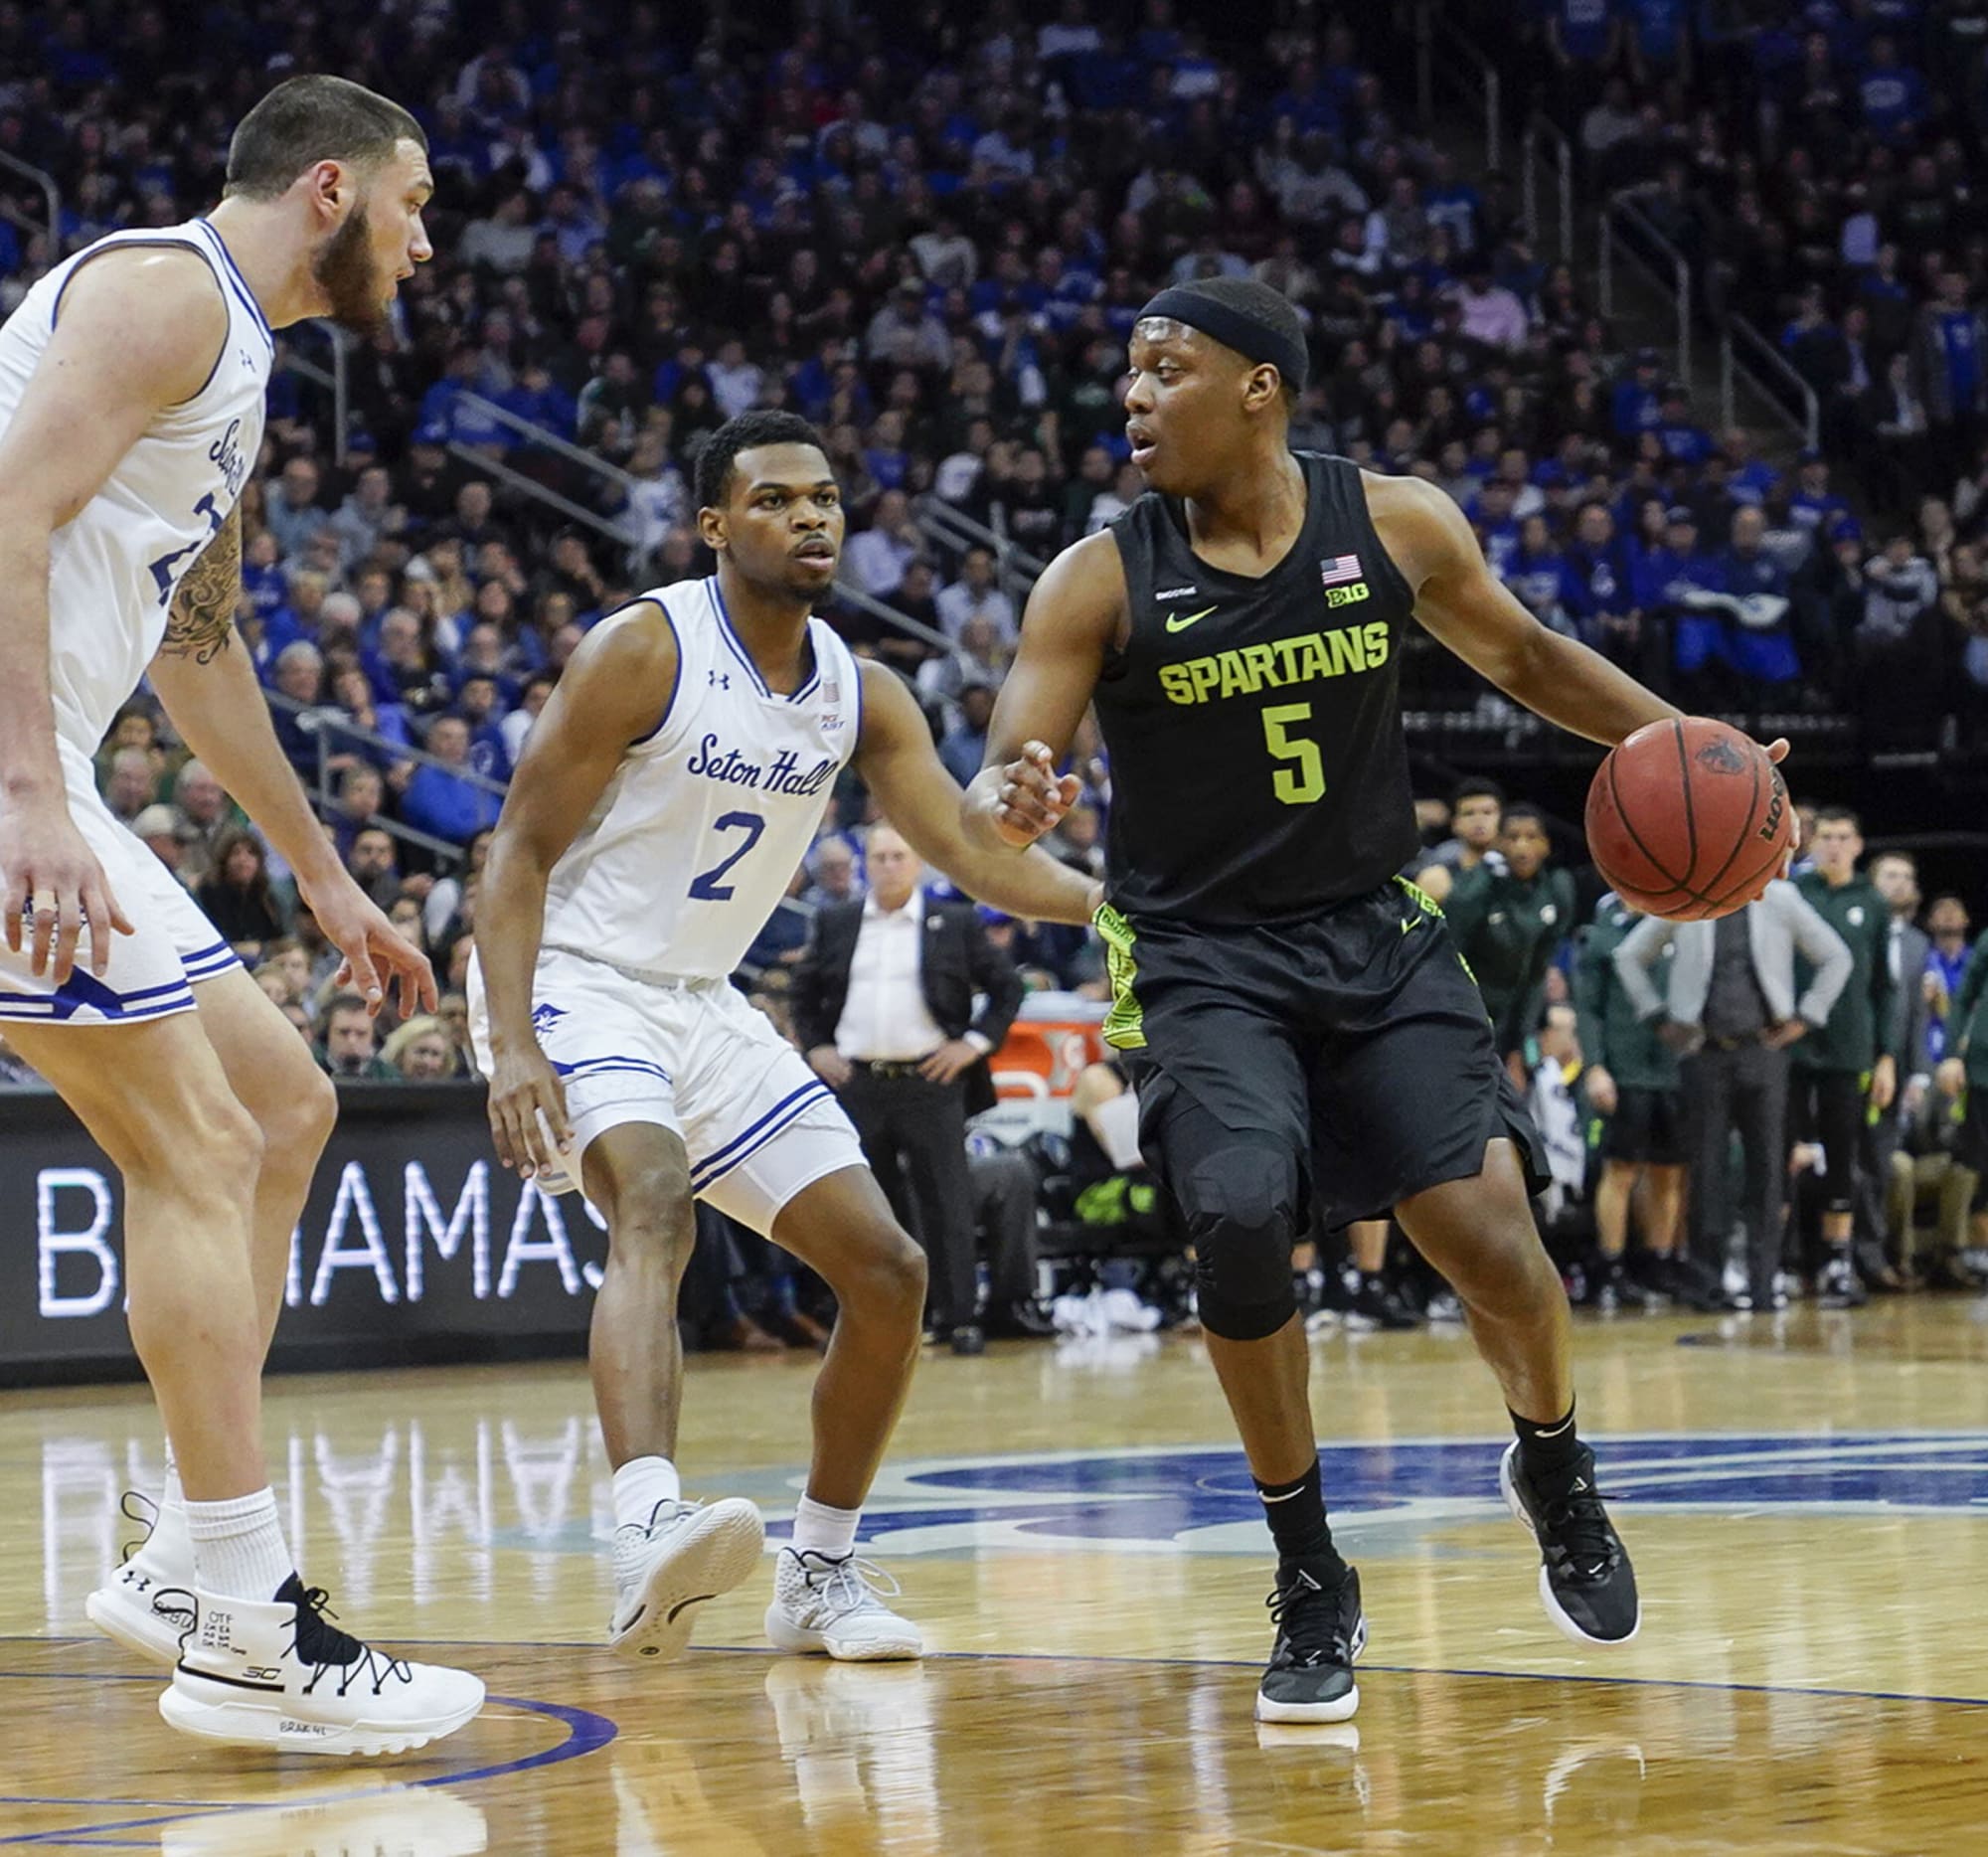 NCAA Basketball: Best from 2019-20 – Michigan State vs. Seton Hall